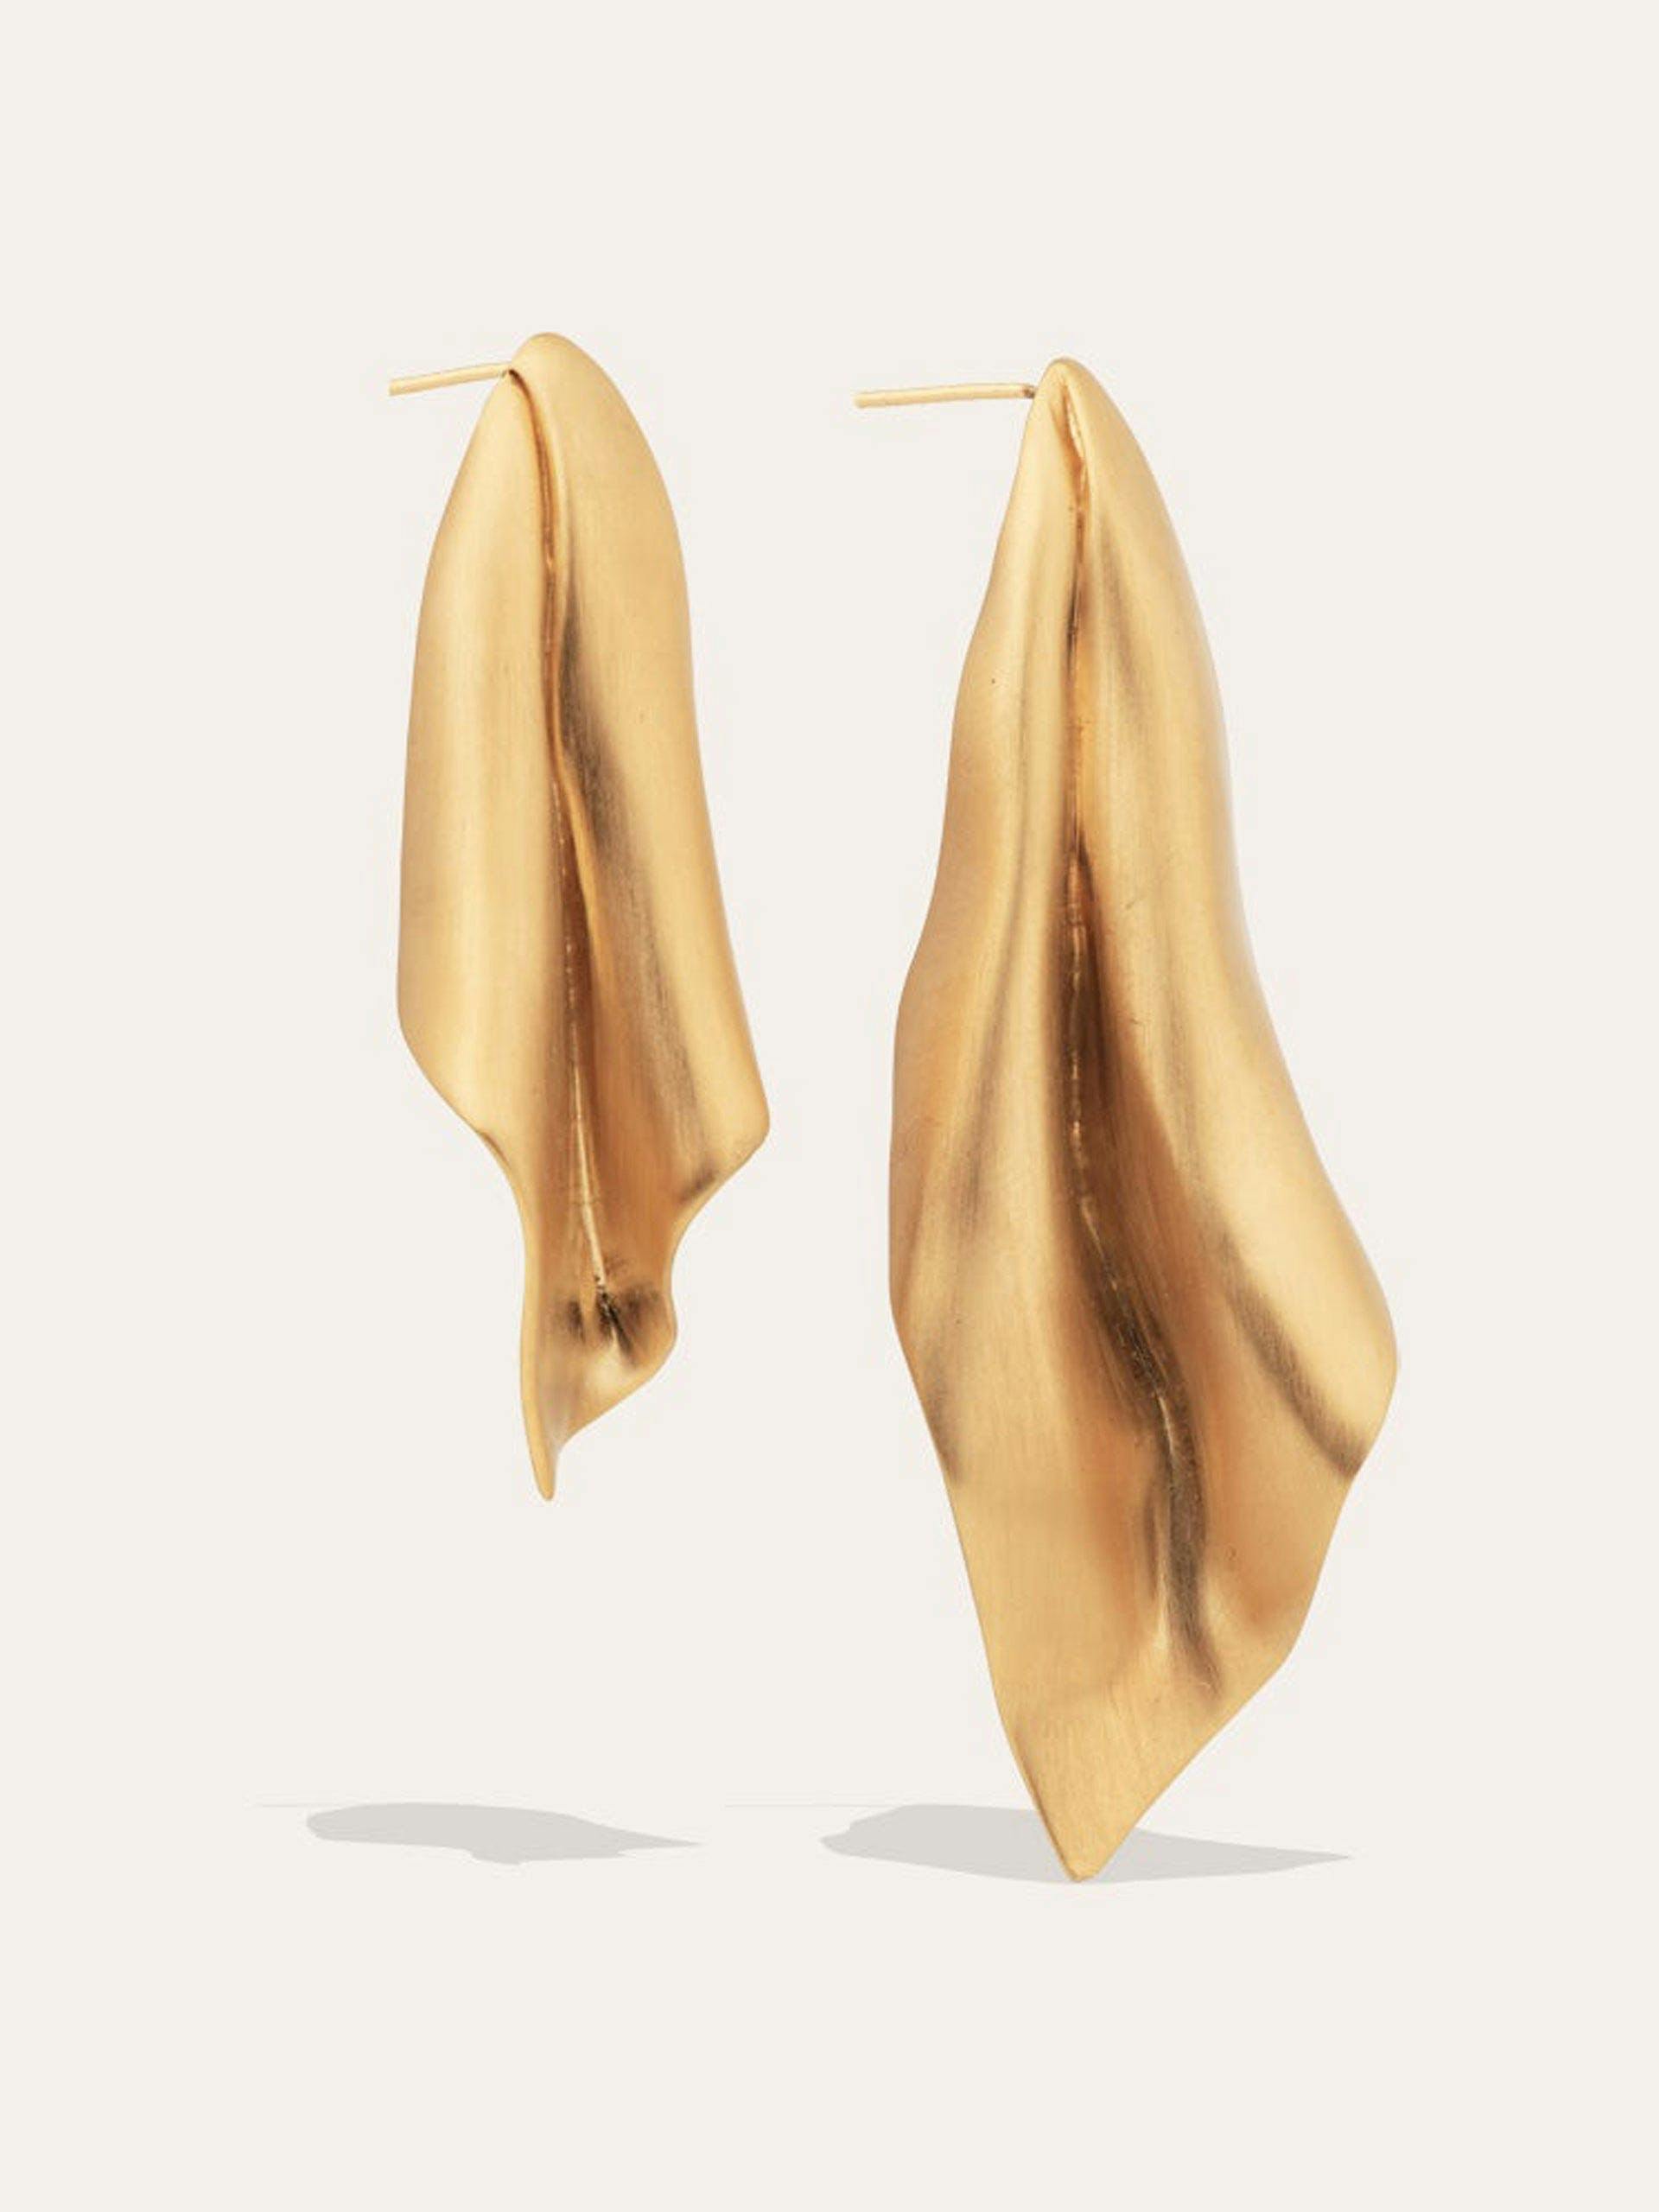 Gold vermeil earrings